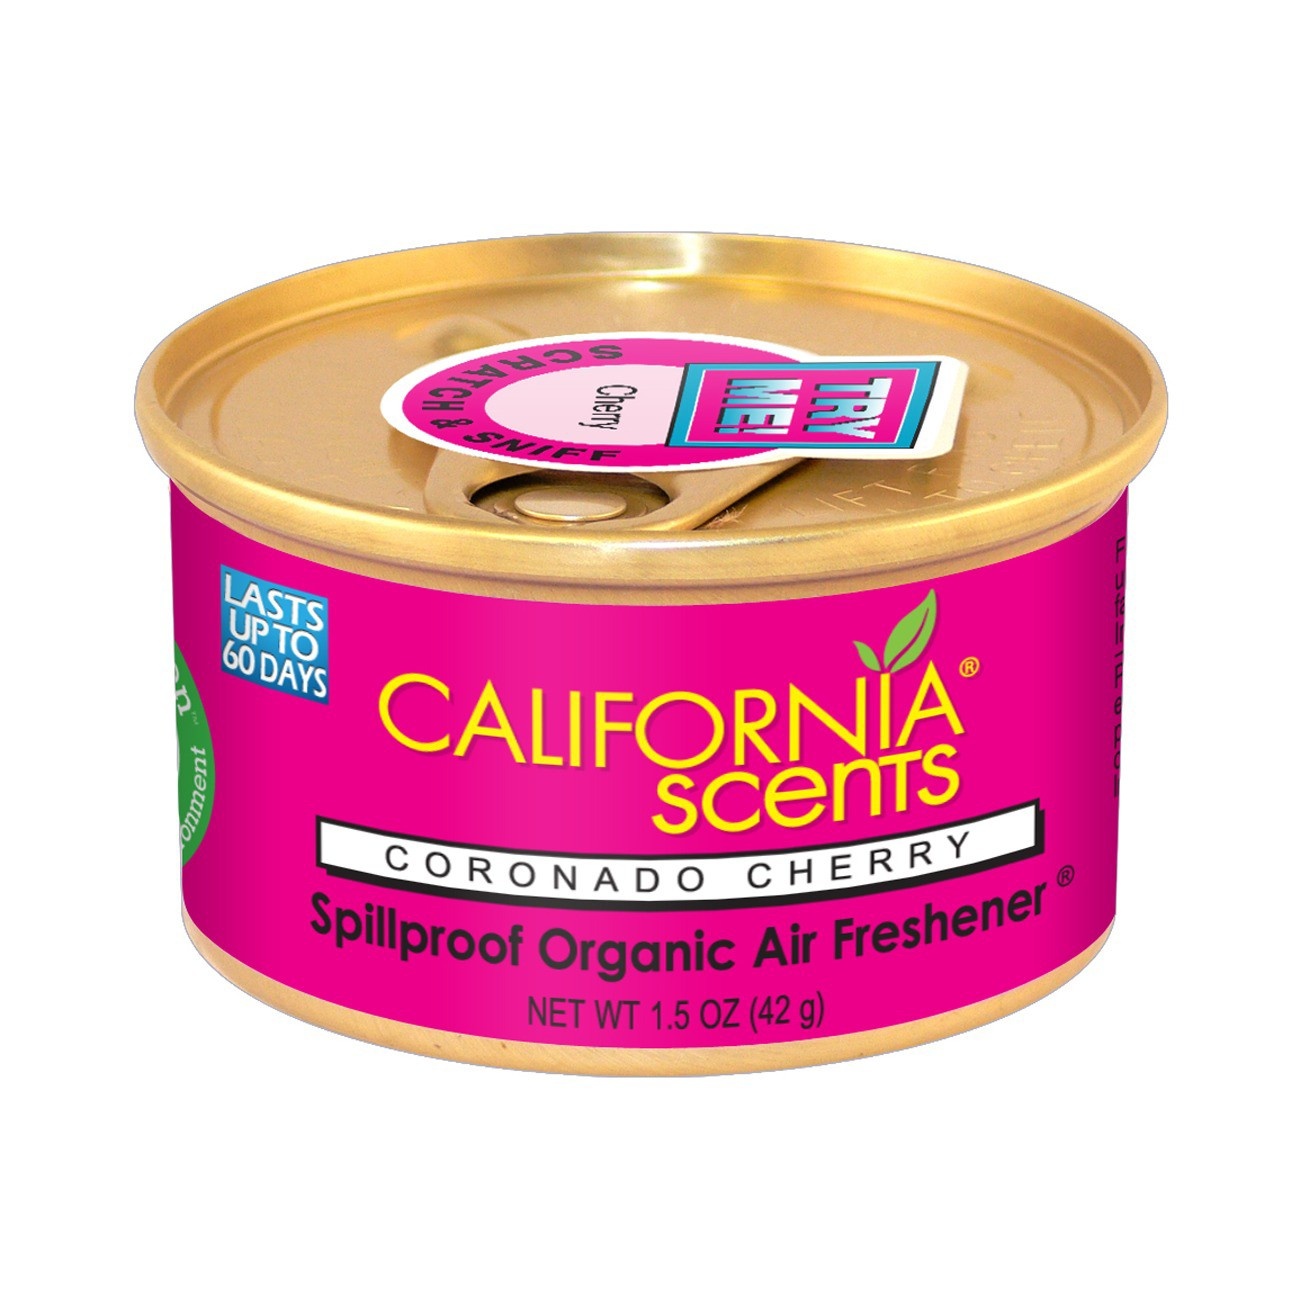 slide 1 of 1, Spillproof Organic Air Freshener Coronado Cherry - California Scents, 1.5 oz